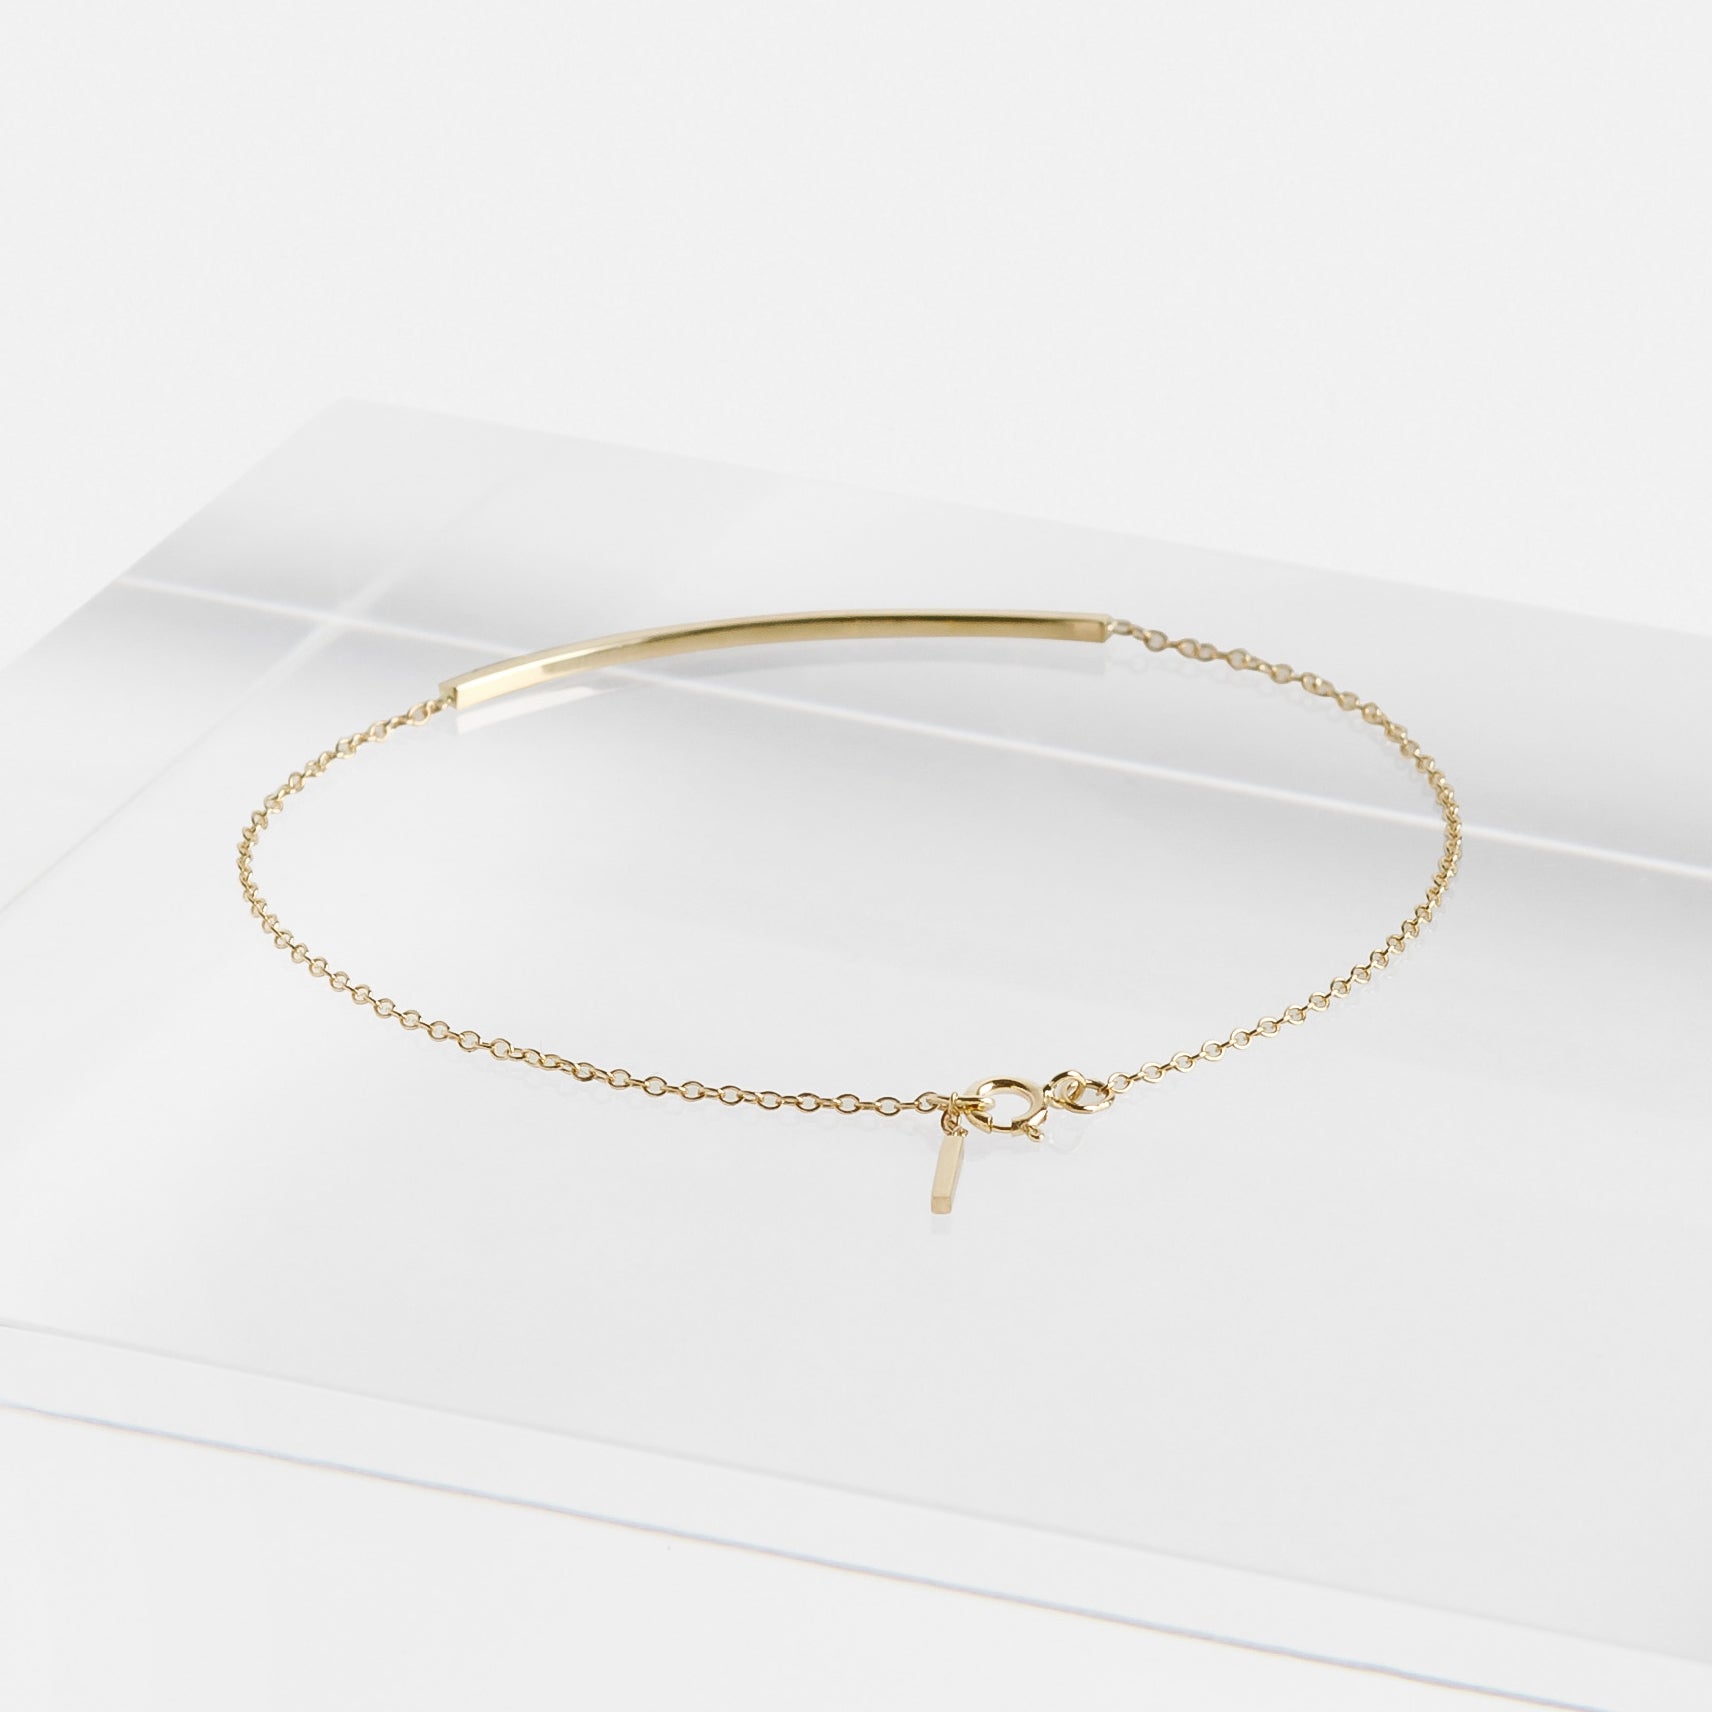 Iva Handmade Bracelet in 14k Gold set with White Diamonds By SHW Fine Jewelry NYC